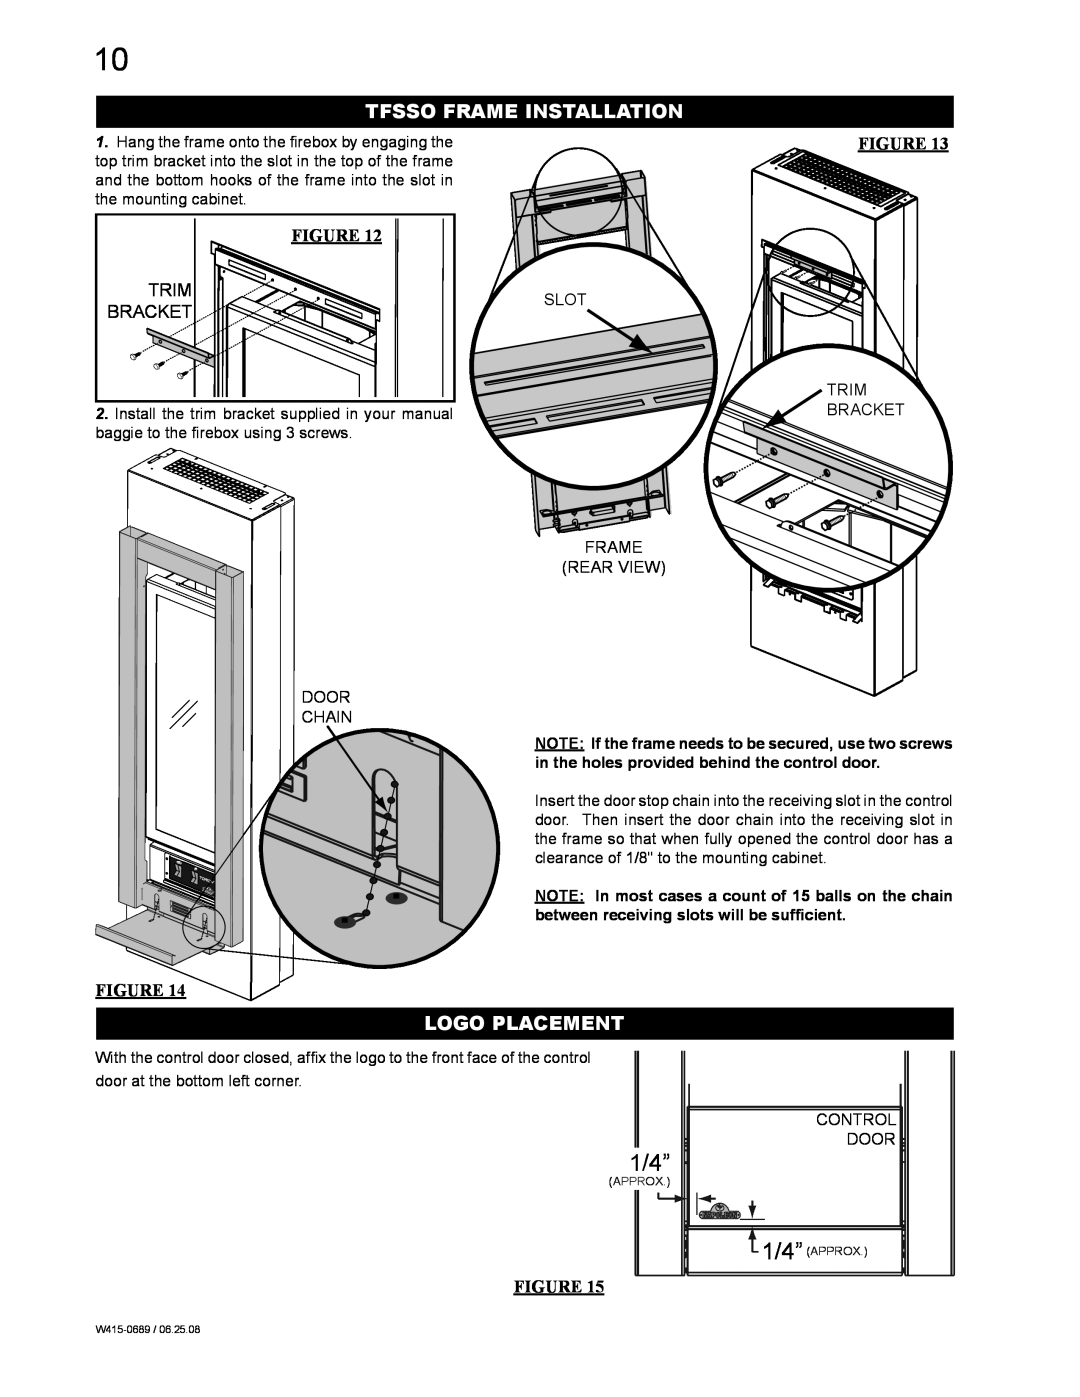 Napoleon Fireplaces GSST8P, GSST8N manual 1/4”, Tfsso Frame Installation, Logo Placement, Trim Bracket 